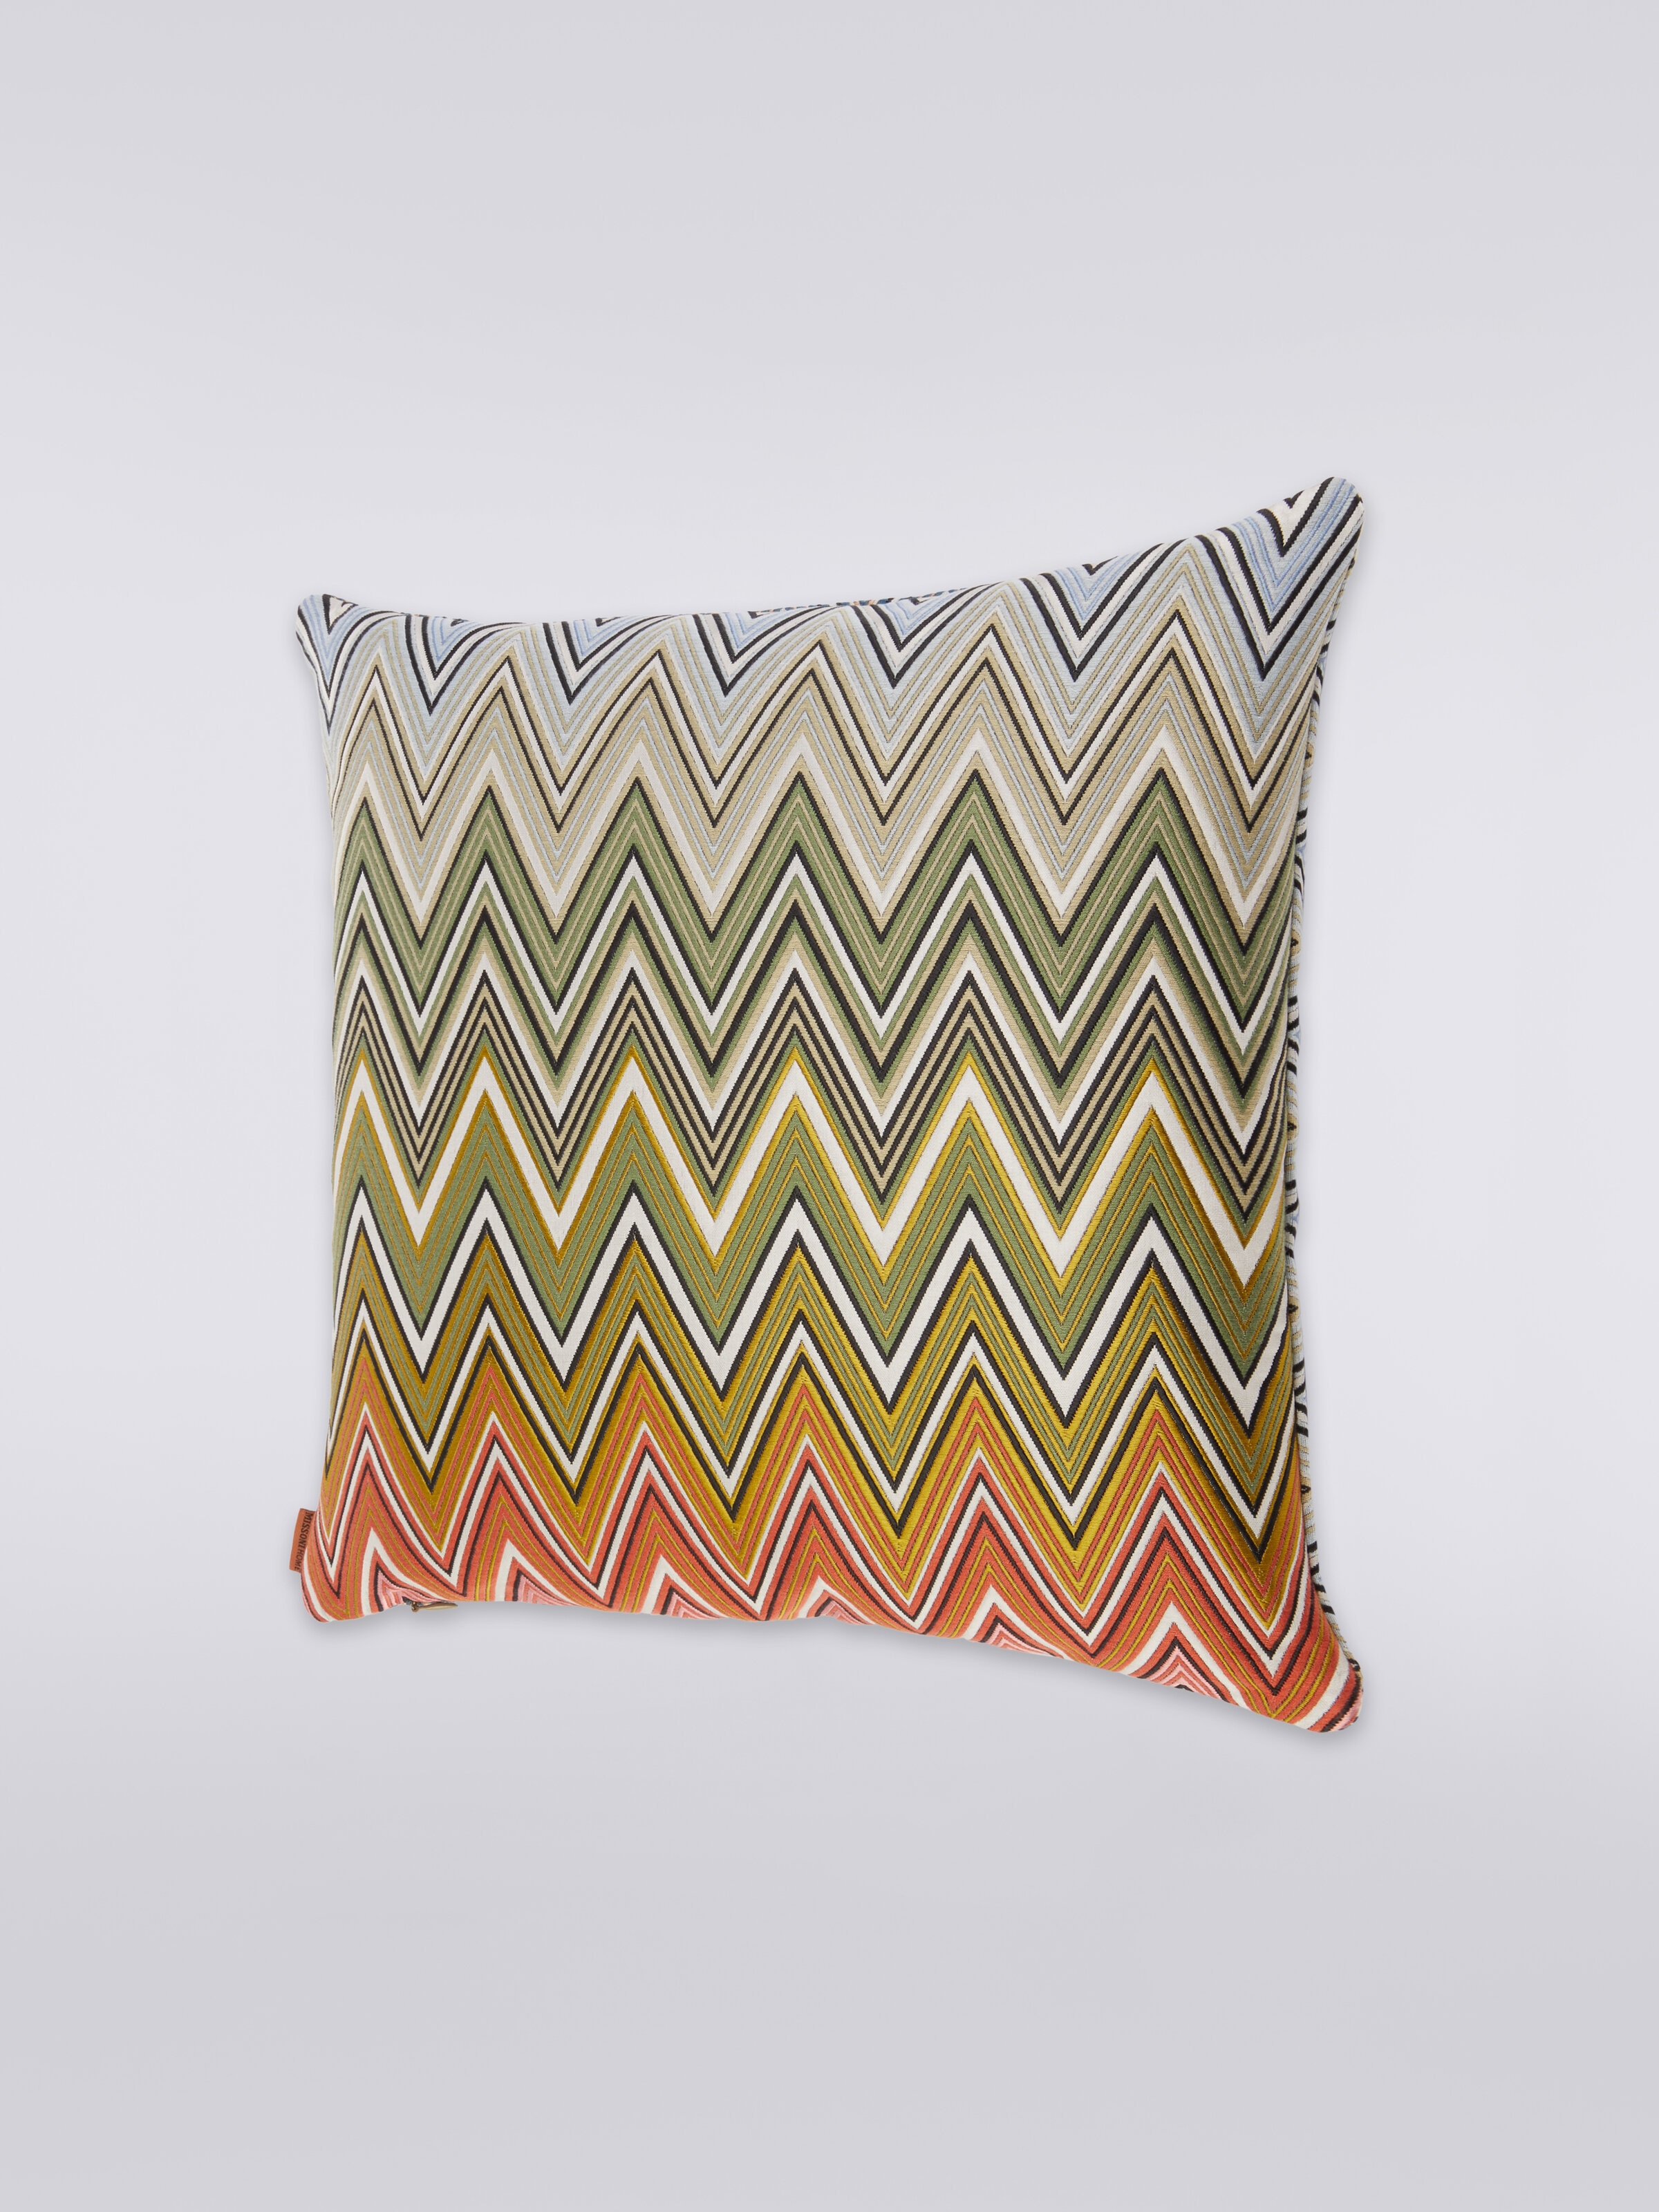 Birmingham PW cushion 40x40 cm, Multicoloured  - 1